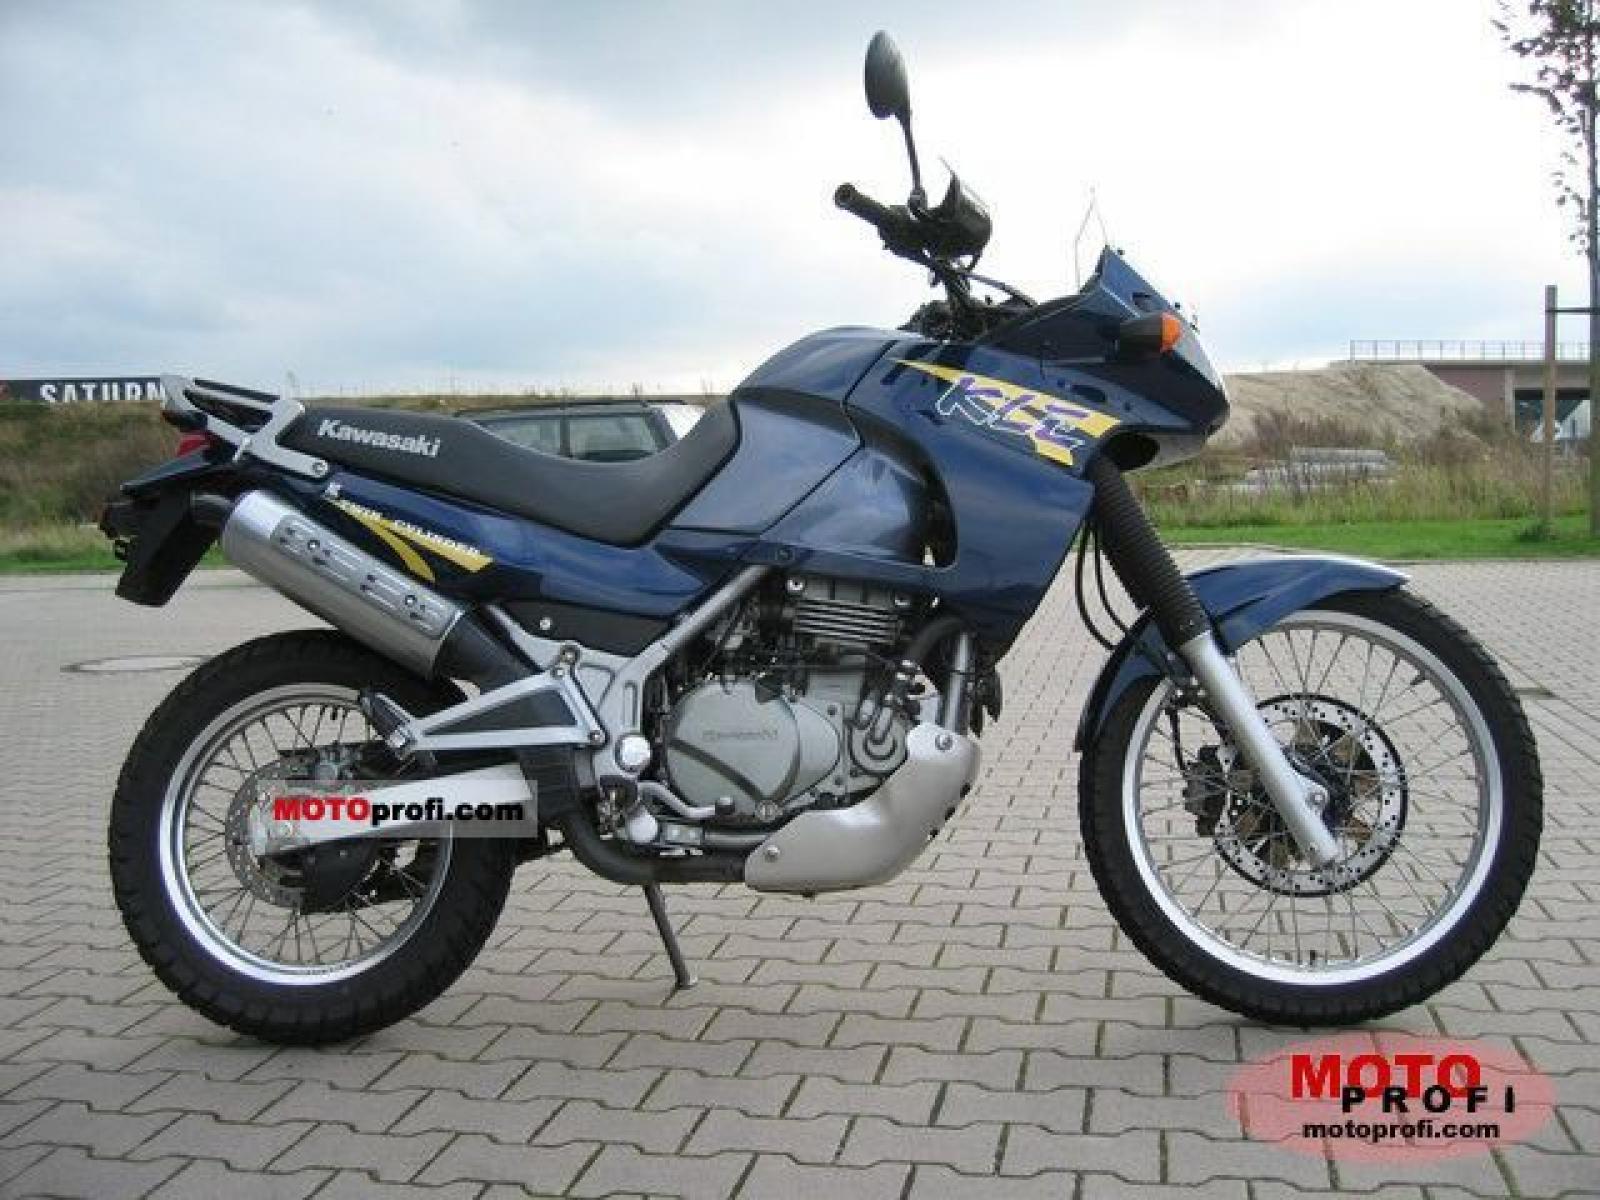 bang Staple bestemt 2007 Kawasaki KLE500 - Moto.ZombDrive.COM